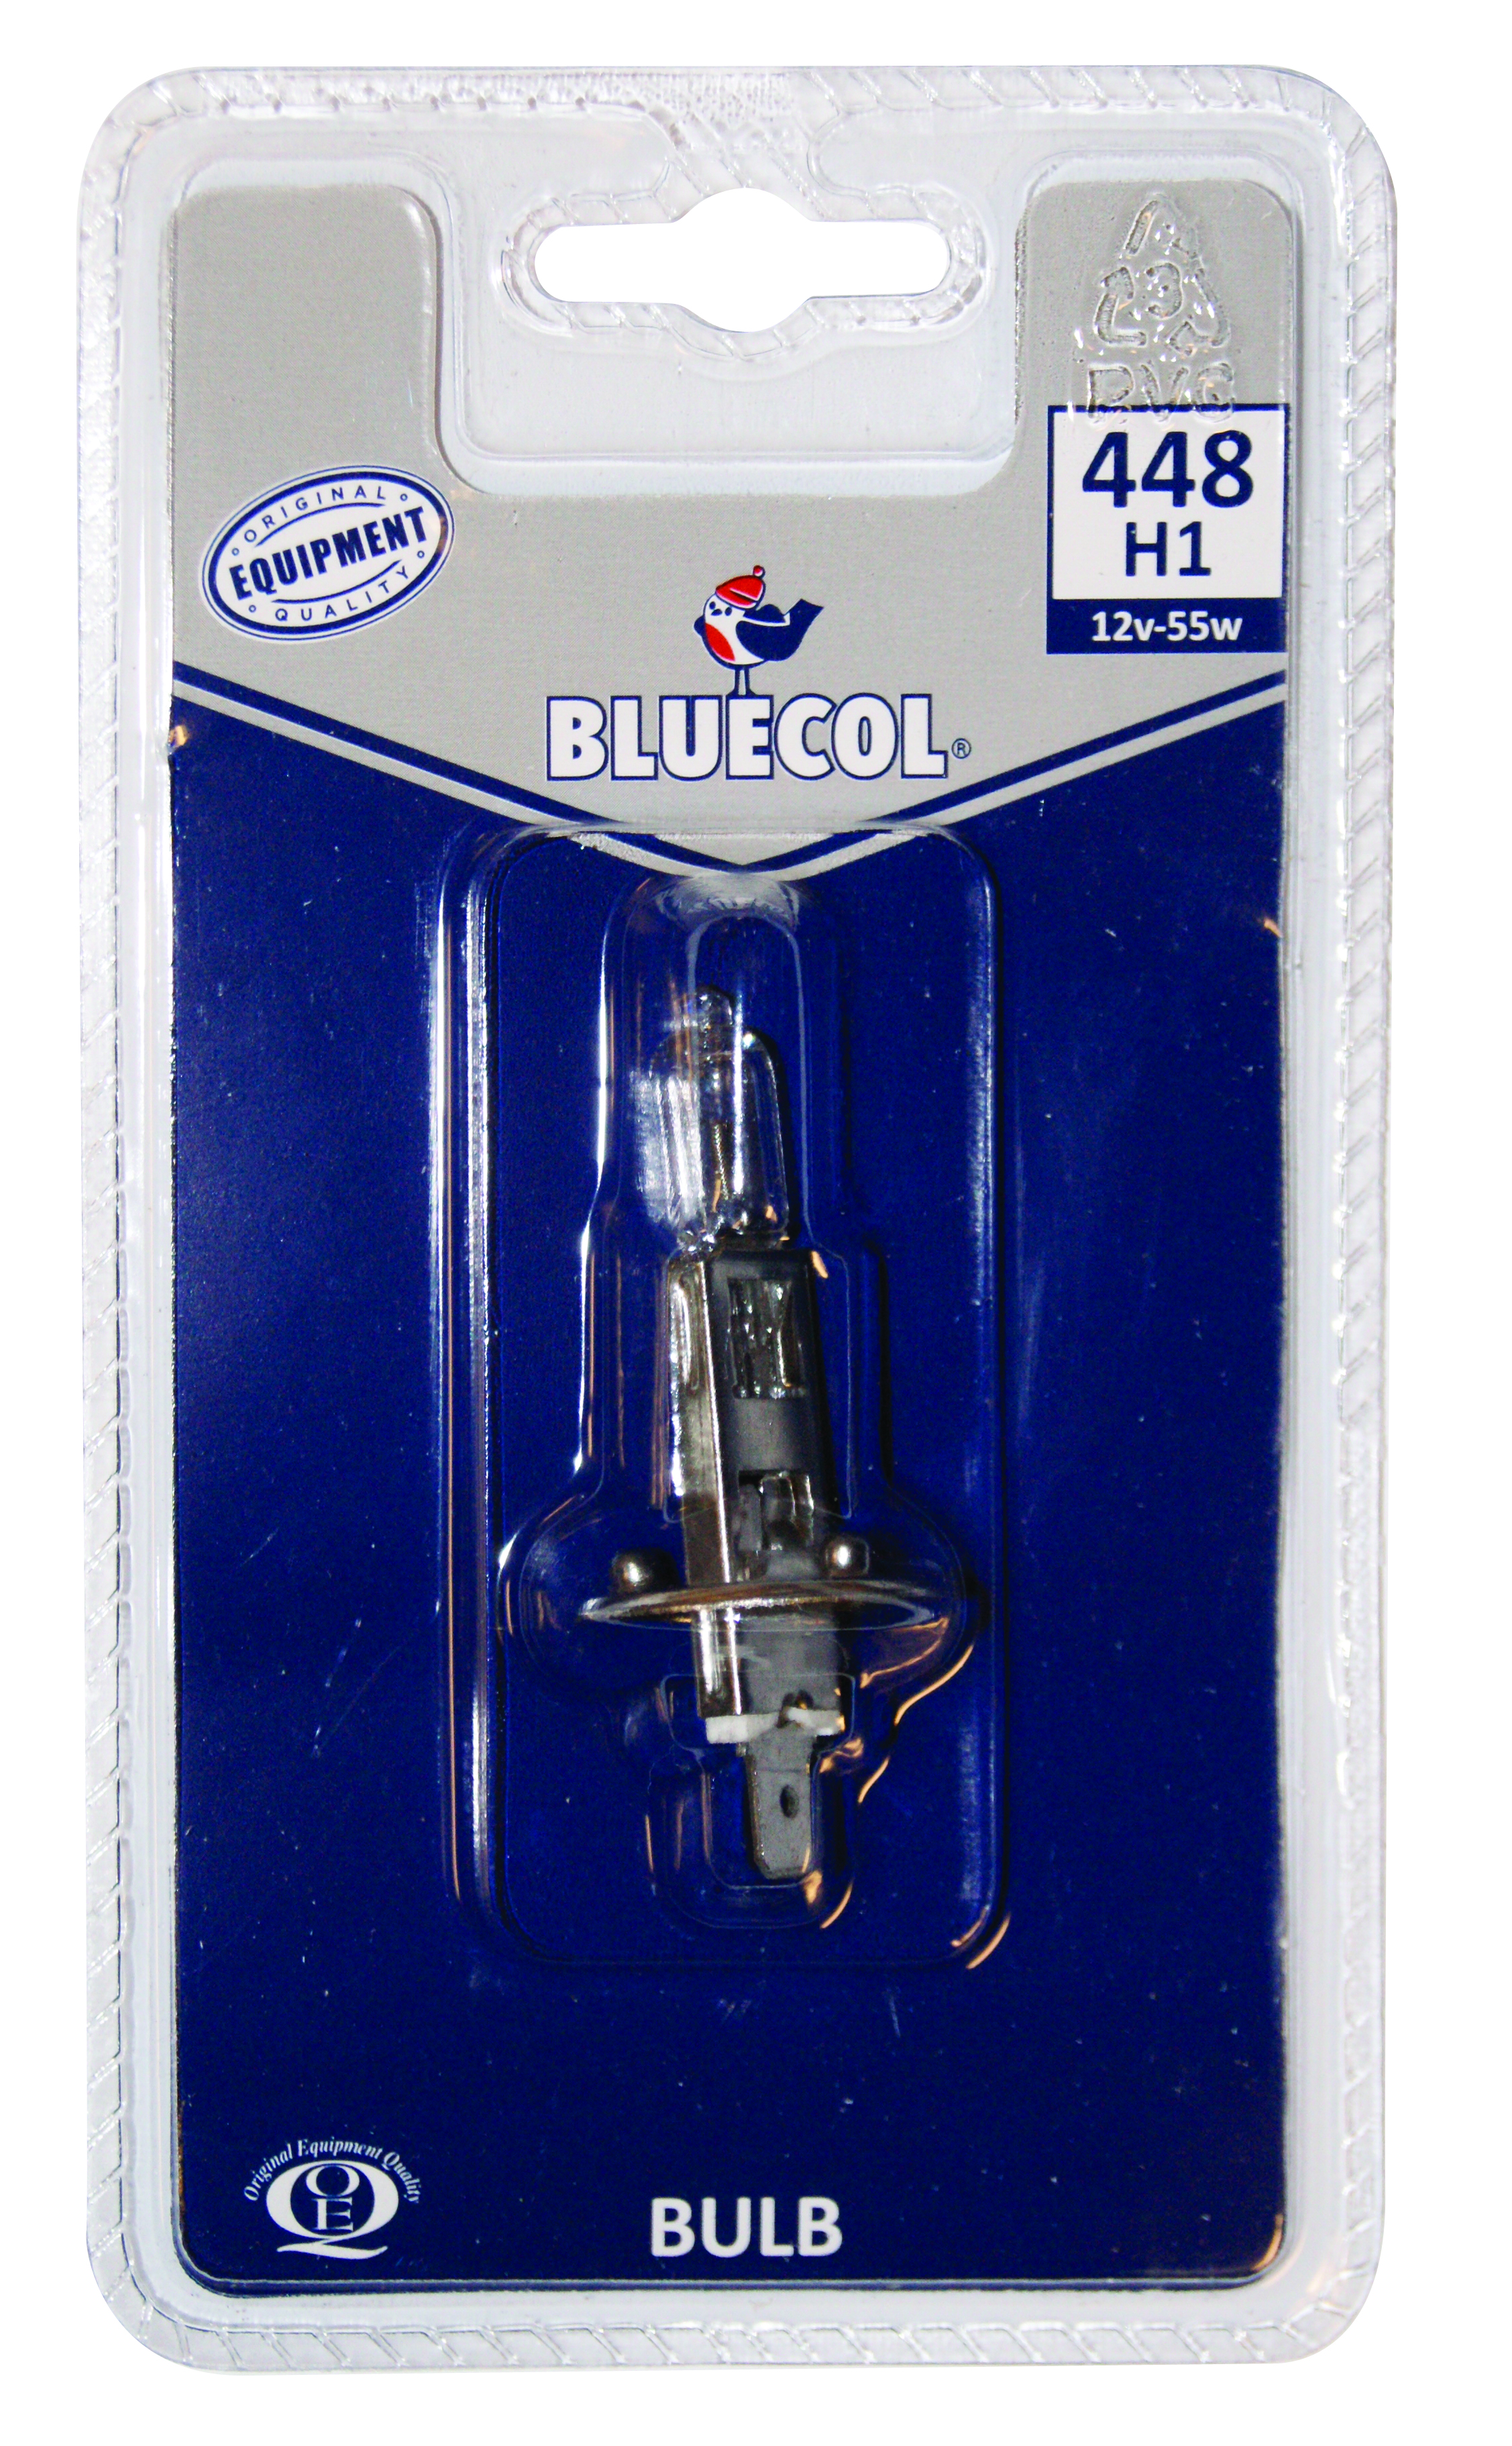 Bluecol 448 H1 Halogen Bulb image